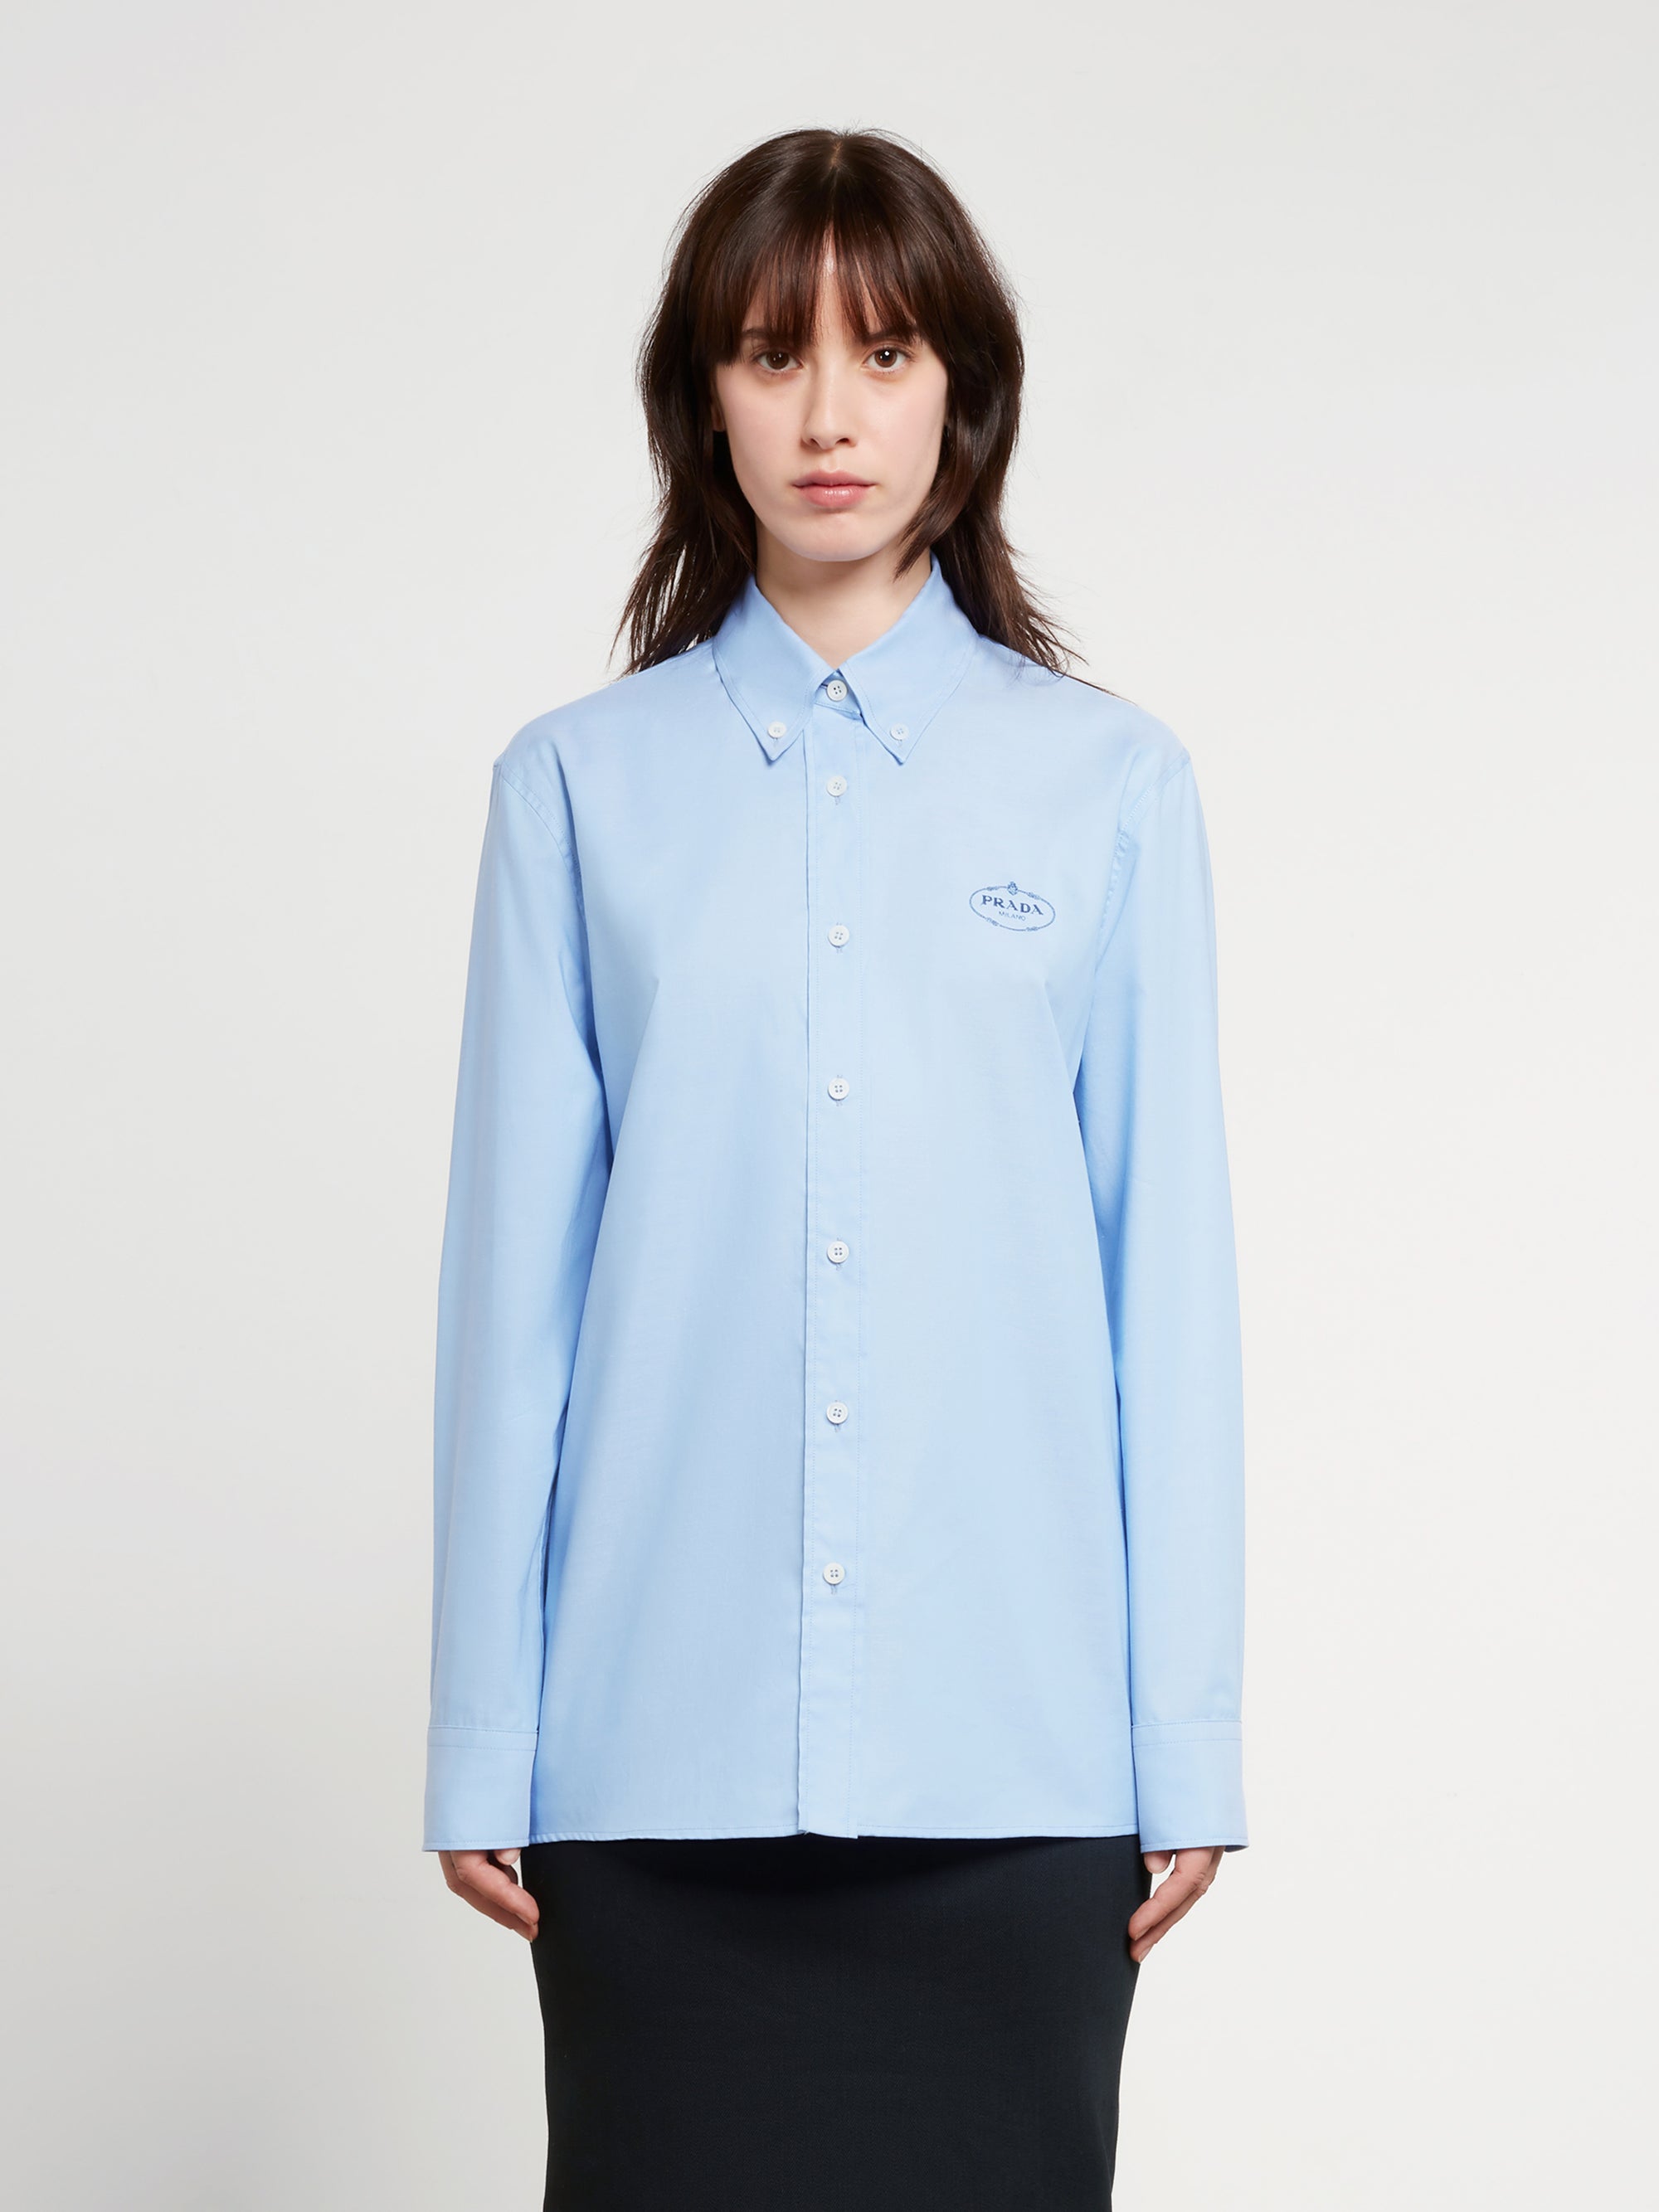 Prada - Women’s Oxford Cotton Shirt - (Light Blue) view 1